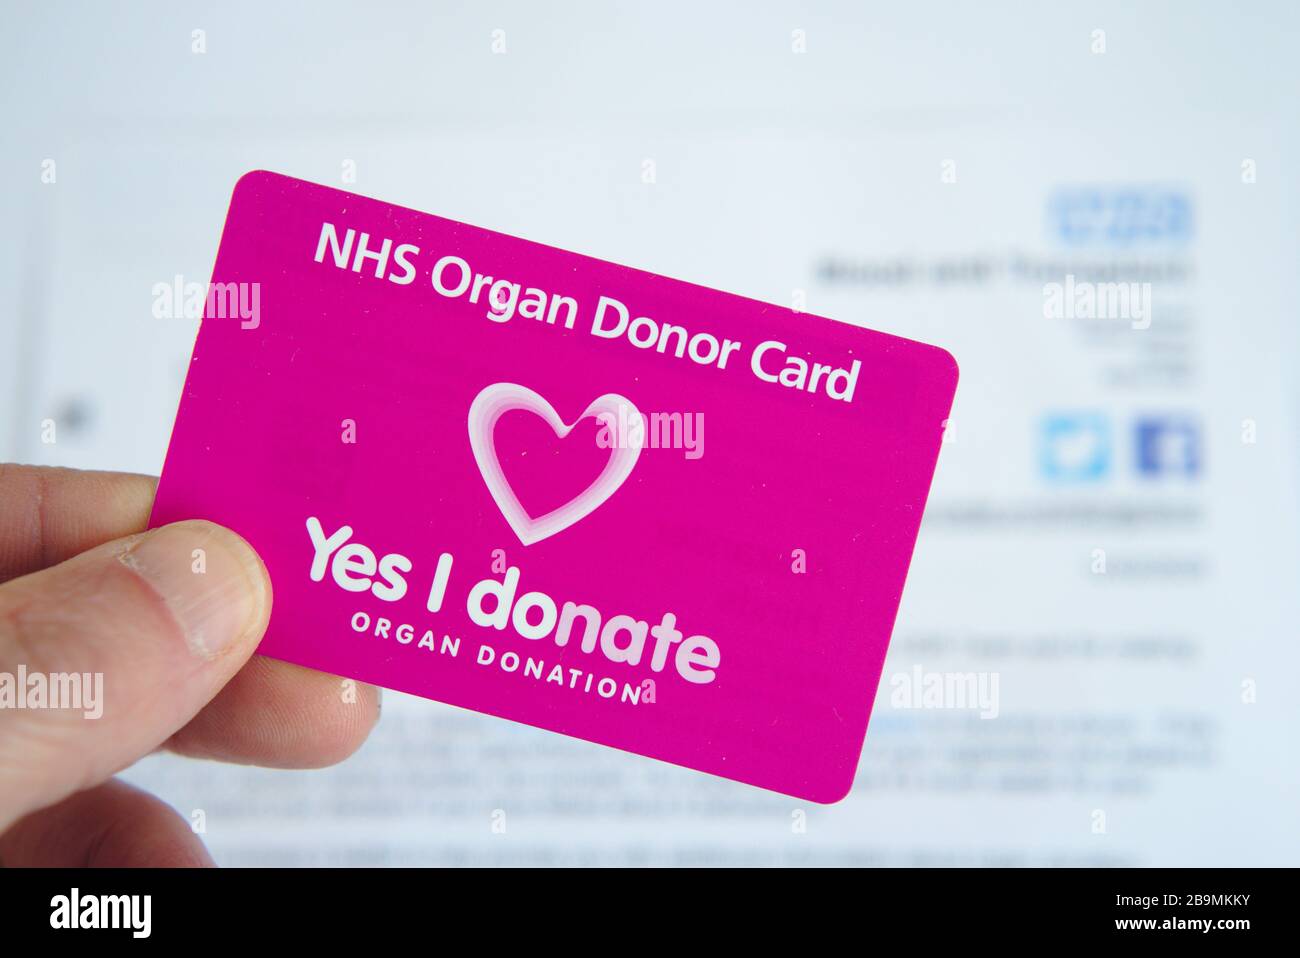 NHS Organ Donor Card stock photo Stock Photo